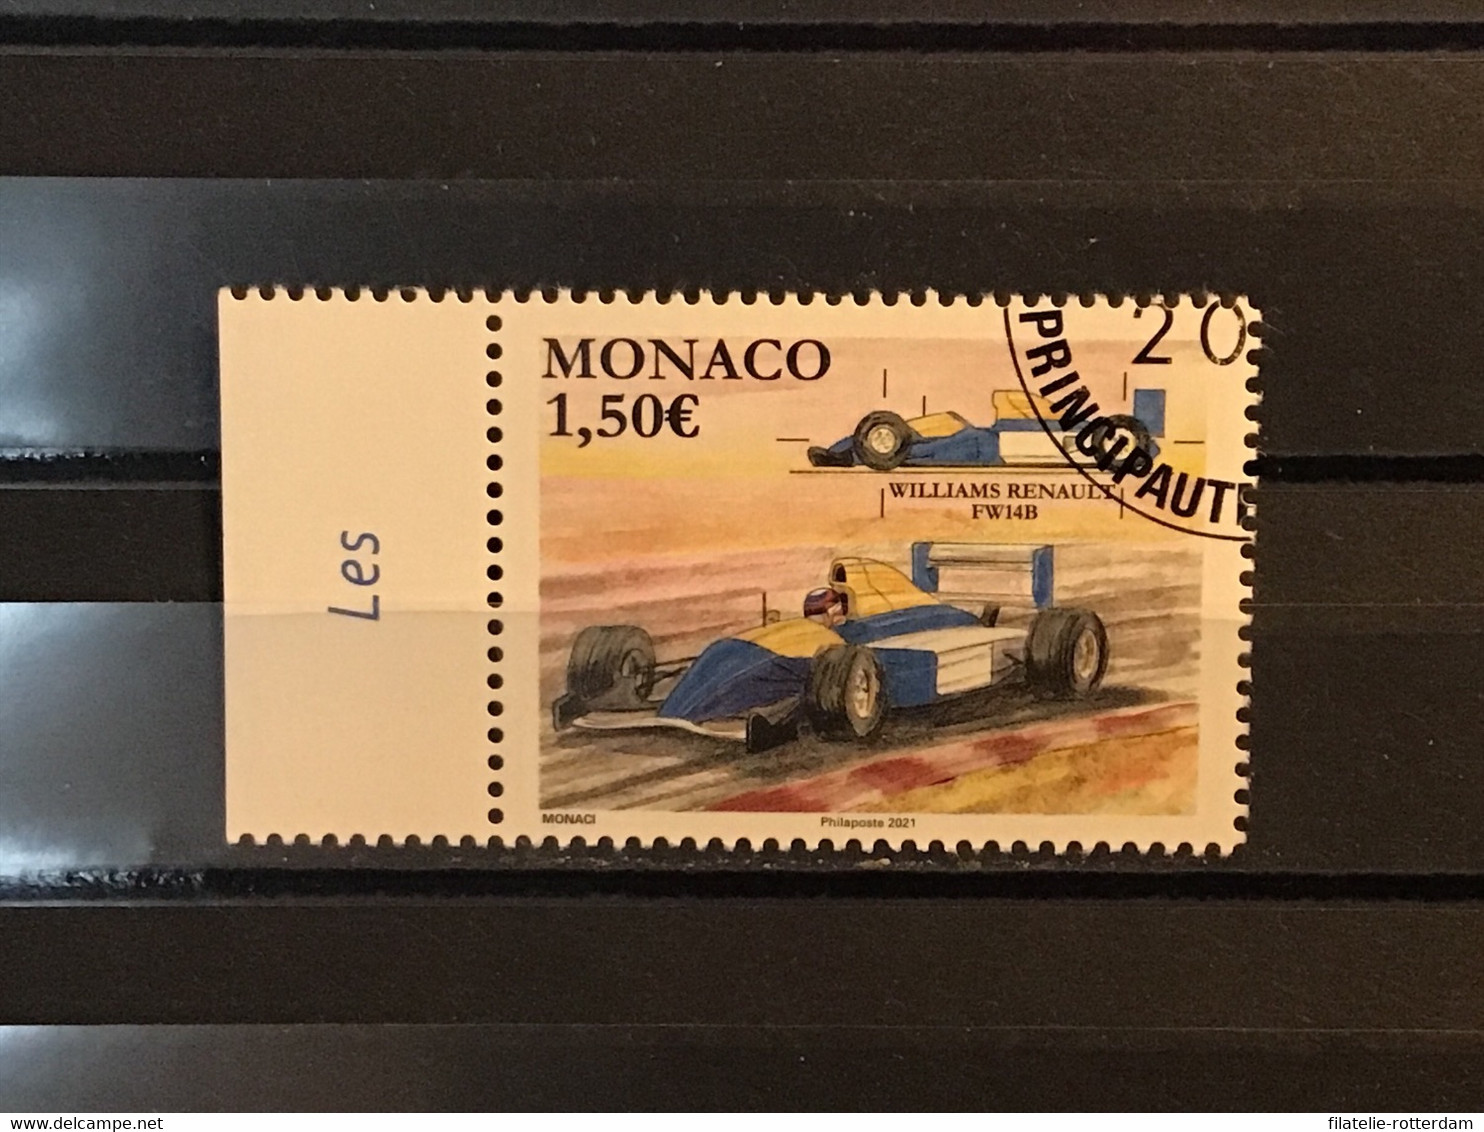 Monaco - Formule 1, Grand Prix Monaco (1.50) 2021 - Gebraucht